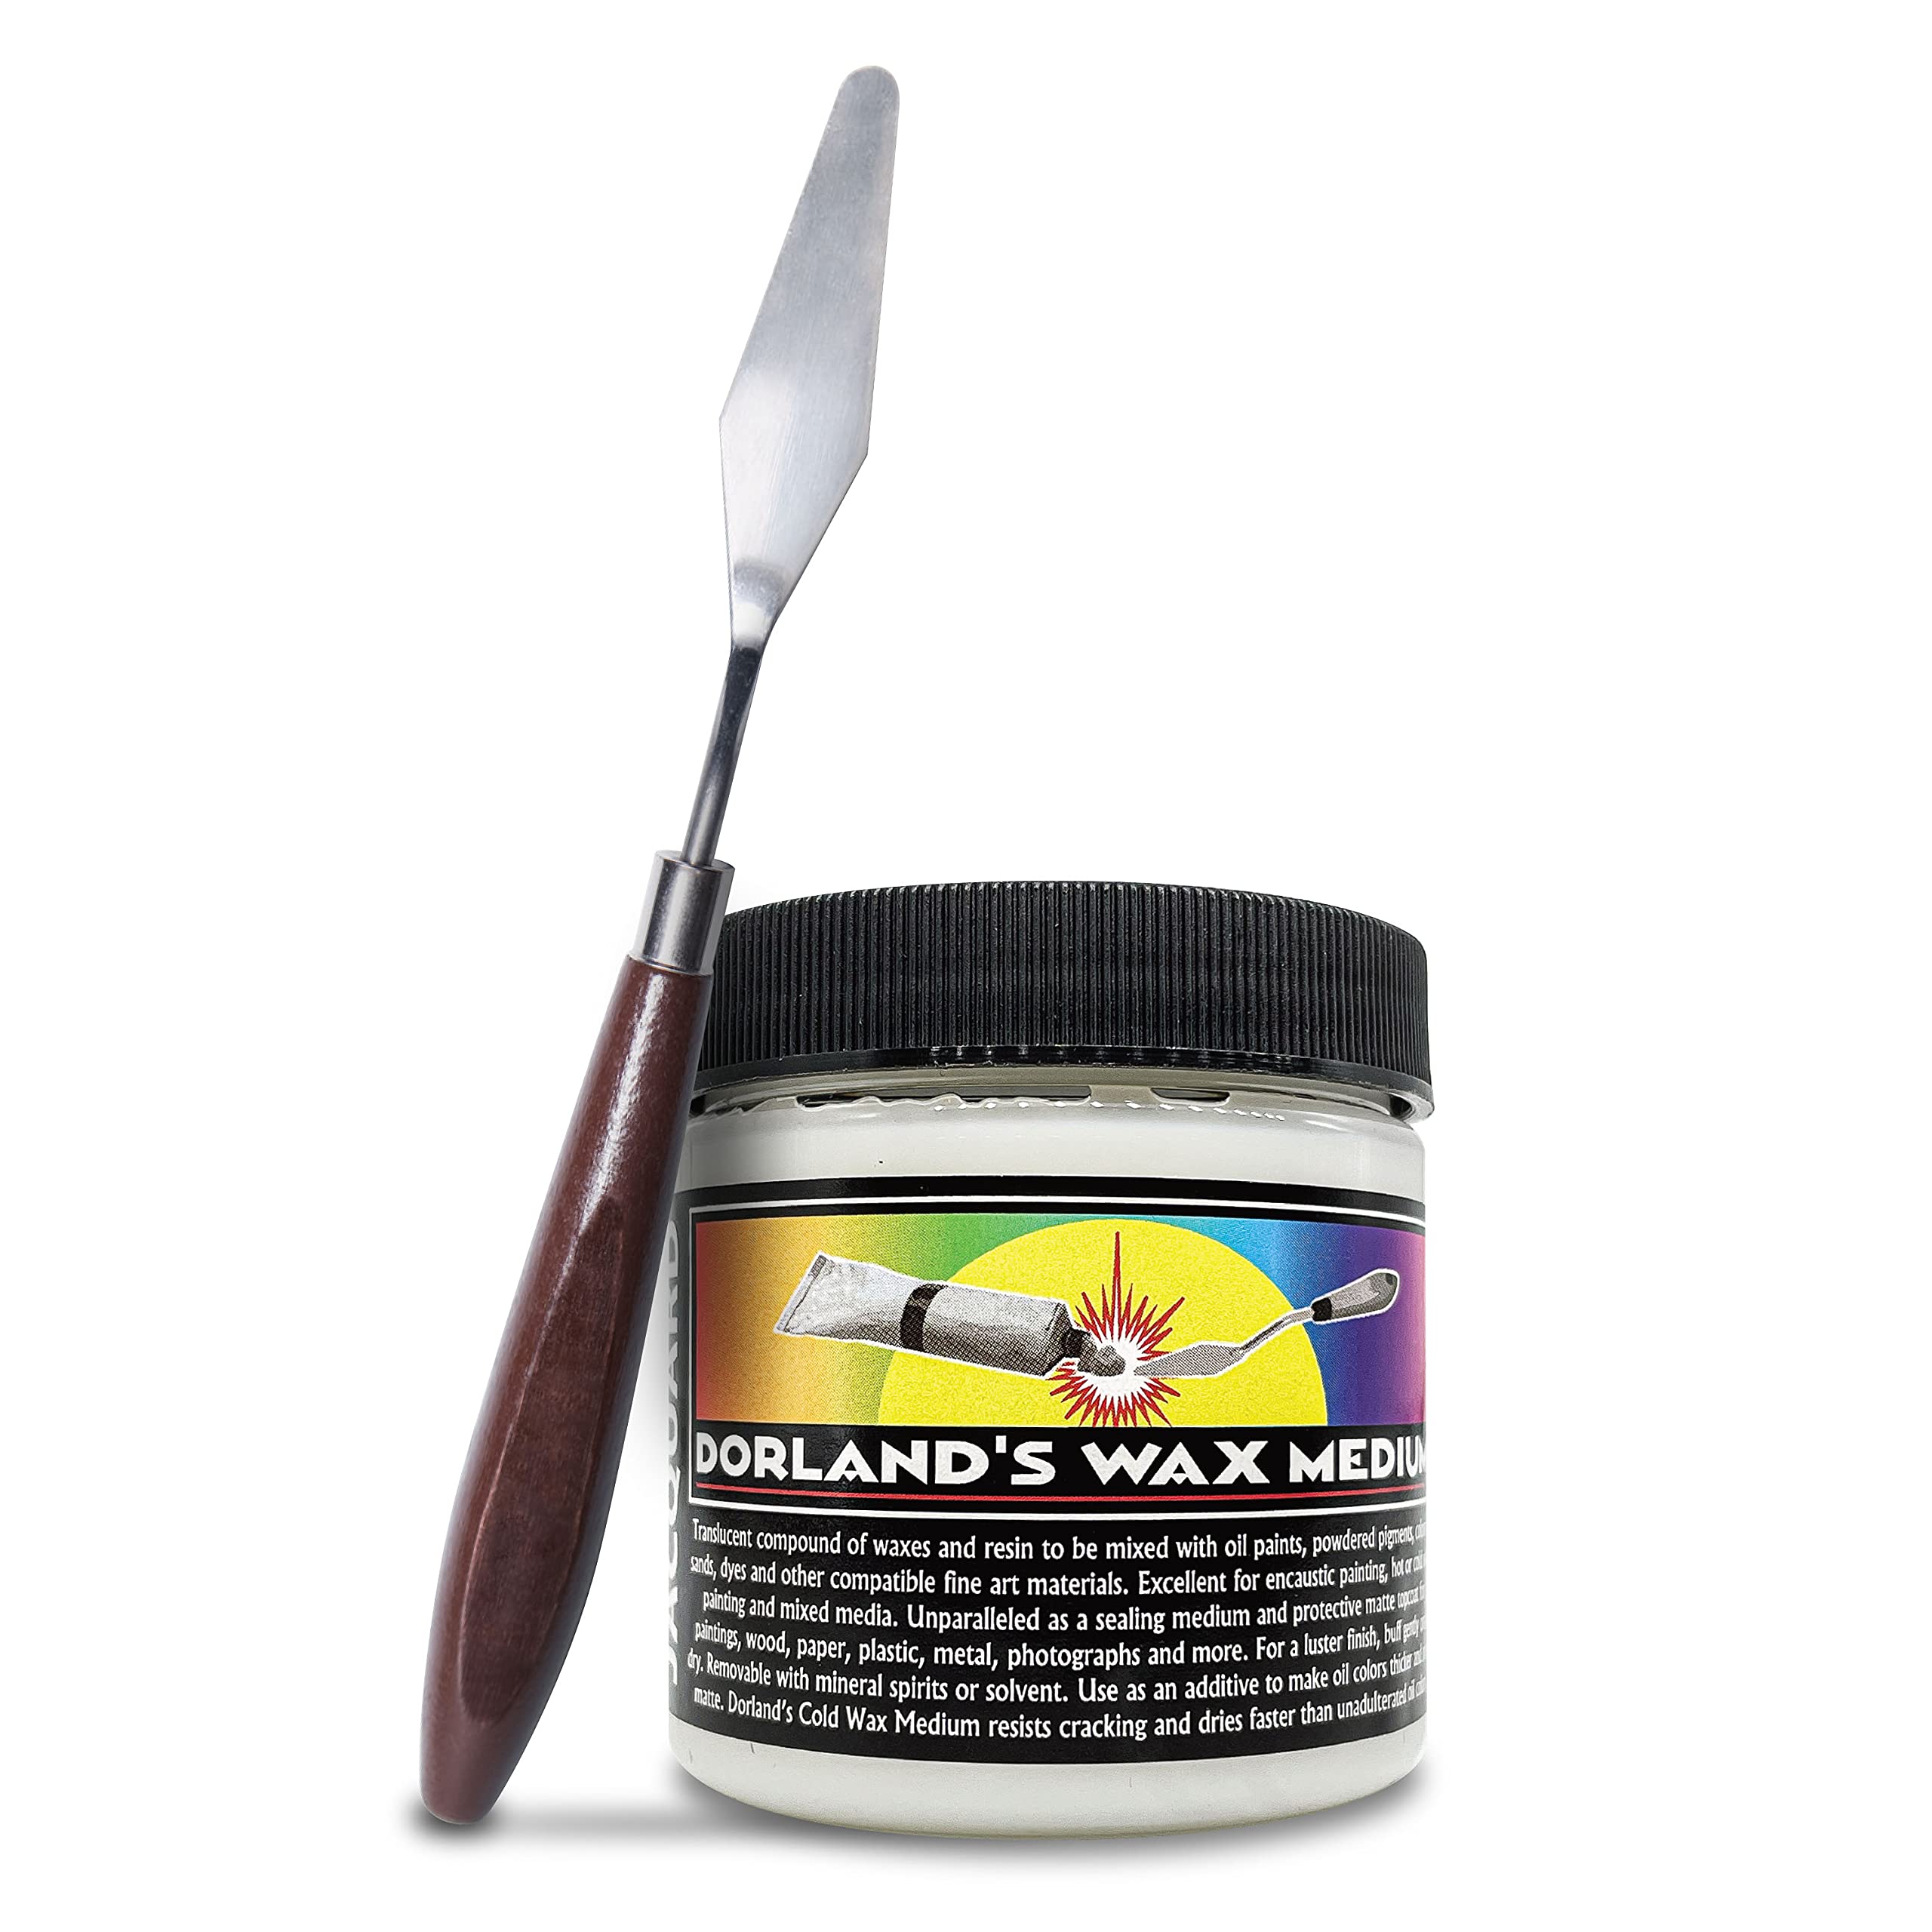 Jacquard Dorlands Wax 4fl oz - Cold Wax Medium Made in USA - Oil